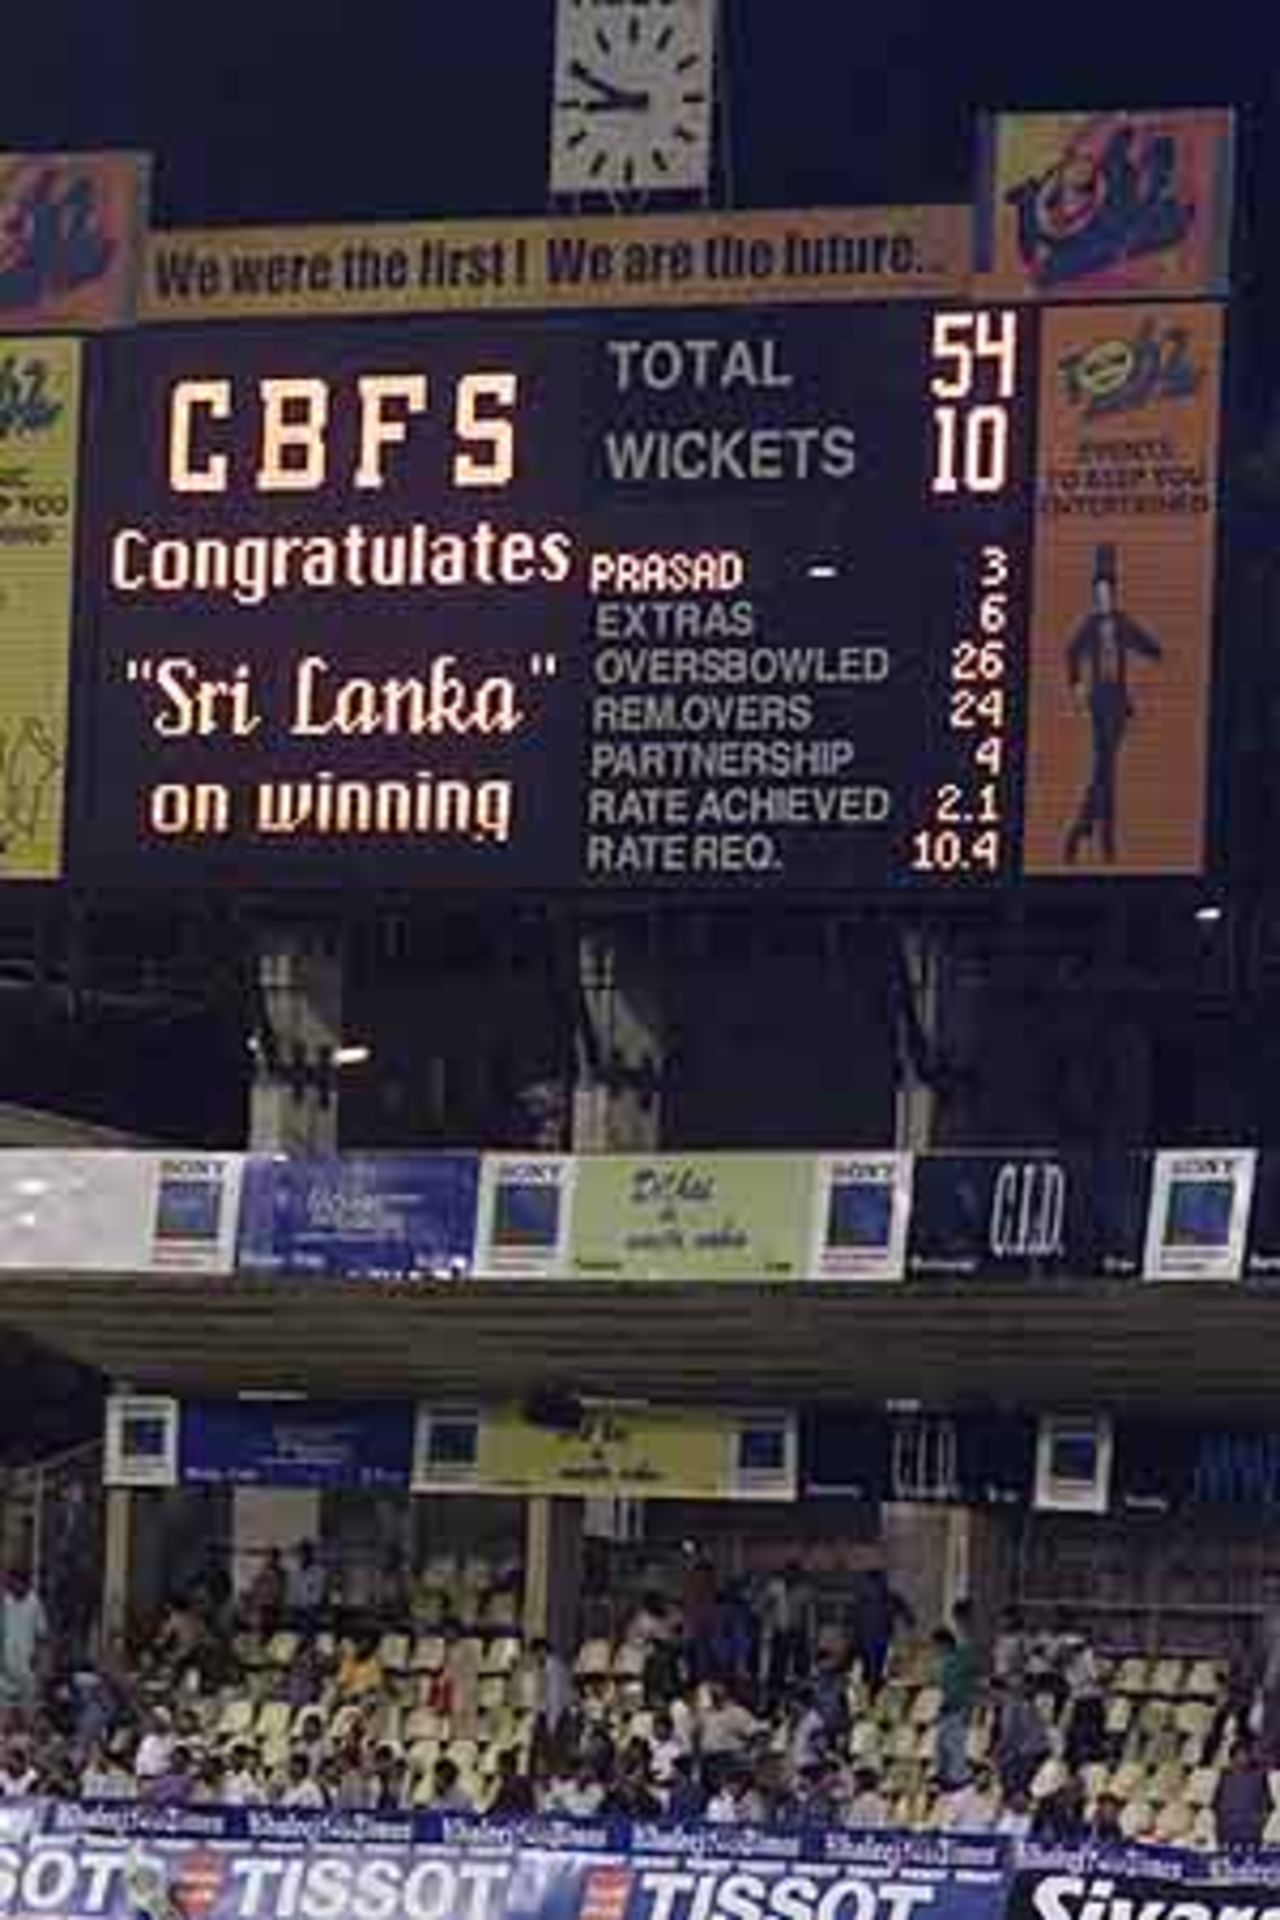 The electronic scoreboard at Sharjah after the Sri Lankan victory, Coca-Cola Champions Trophy, 2000/01, Final, India v Sri Lanka, Sharjah C.A. Stadium, 29 October 2000.